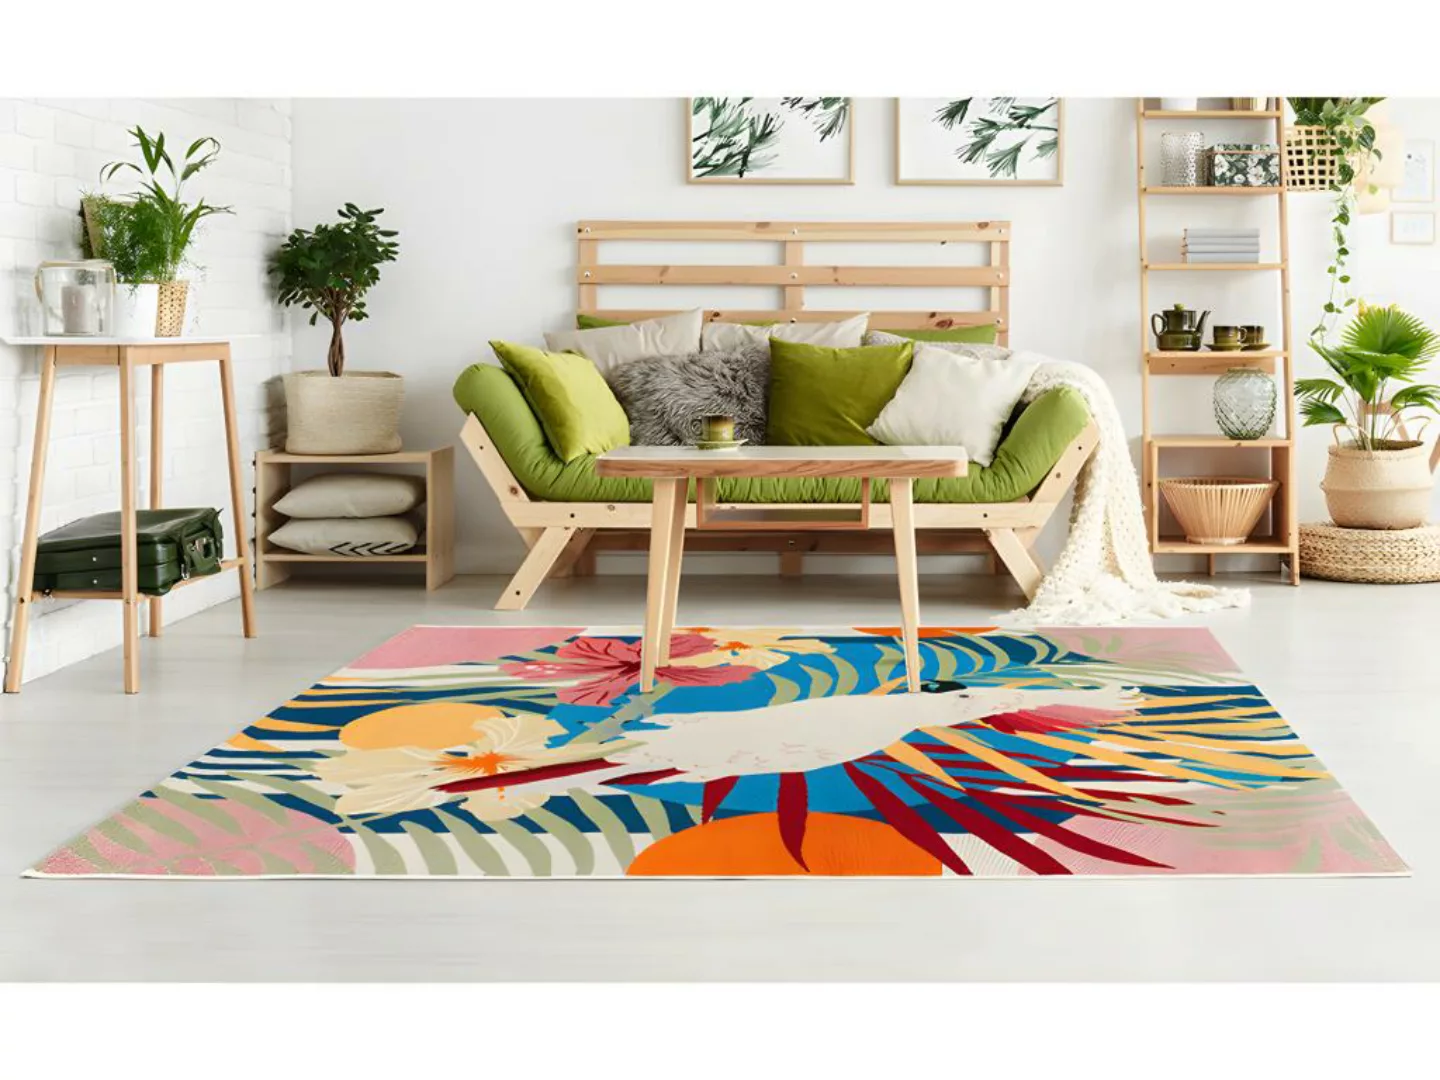 Teppich Indoor & Outdoor - 150 x 200 cm - Mehrfarbig - PERROCO günstig online kaufen